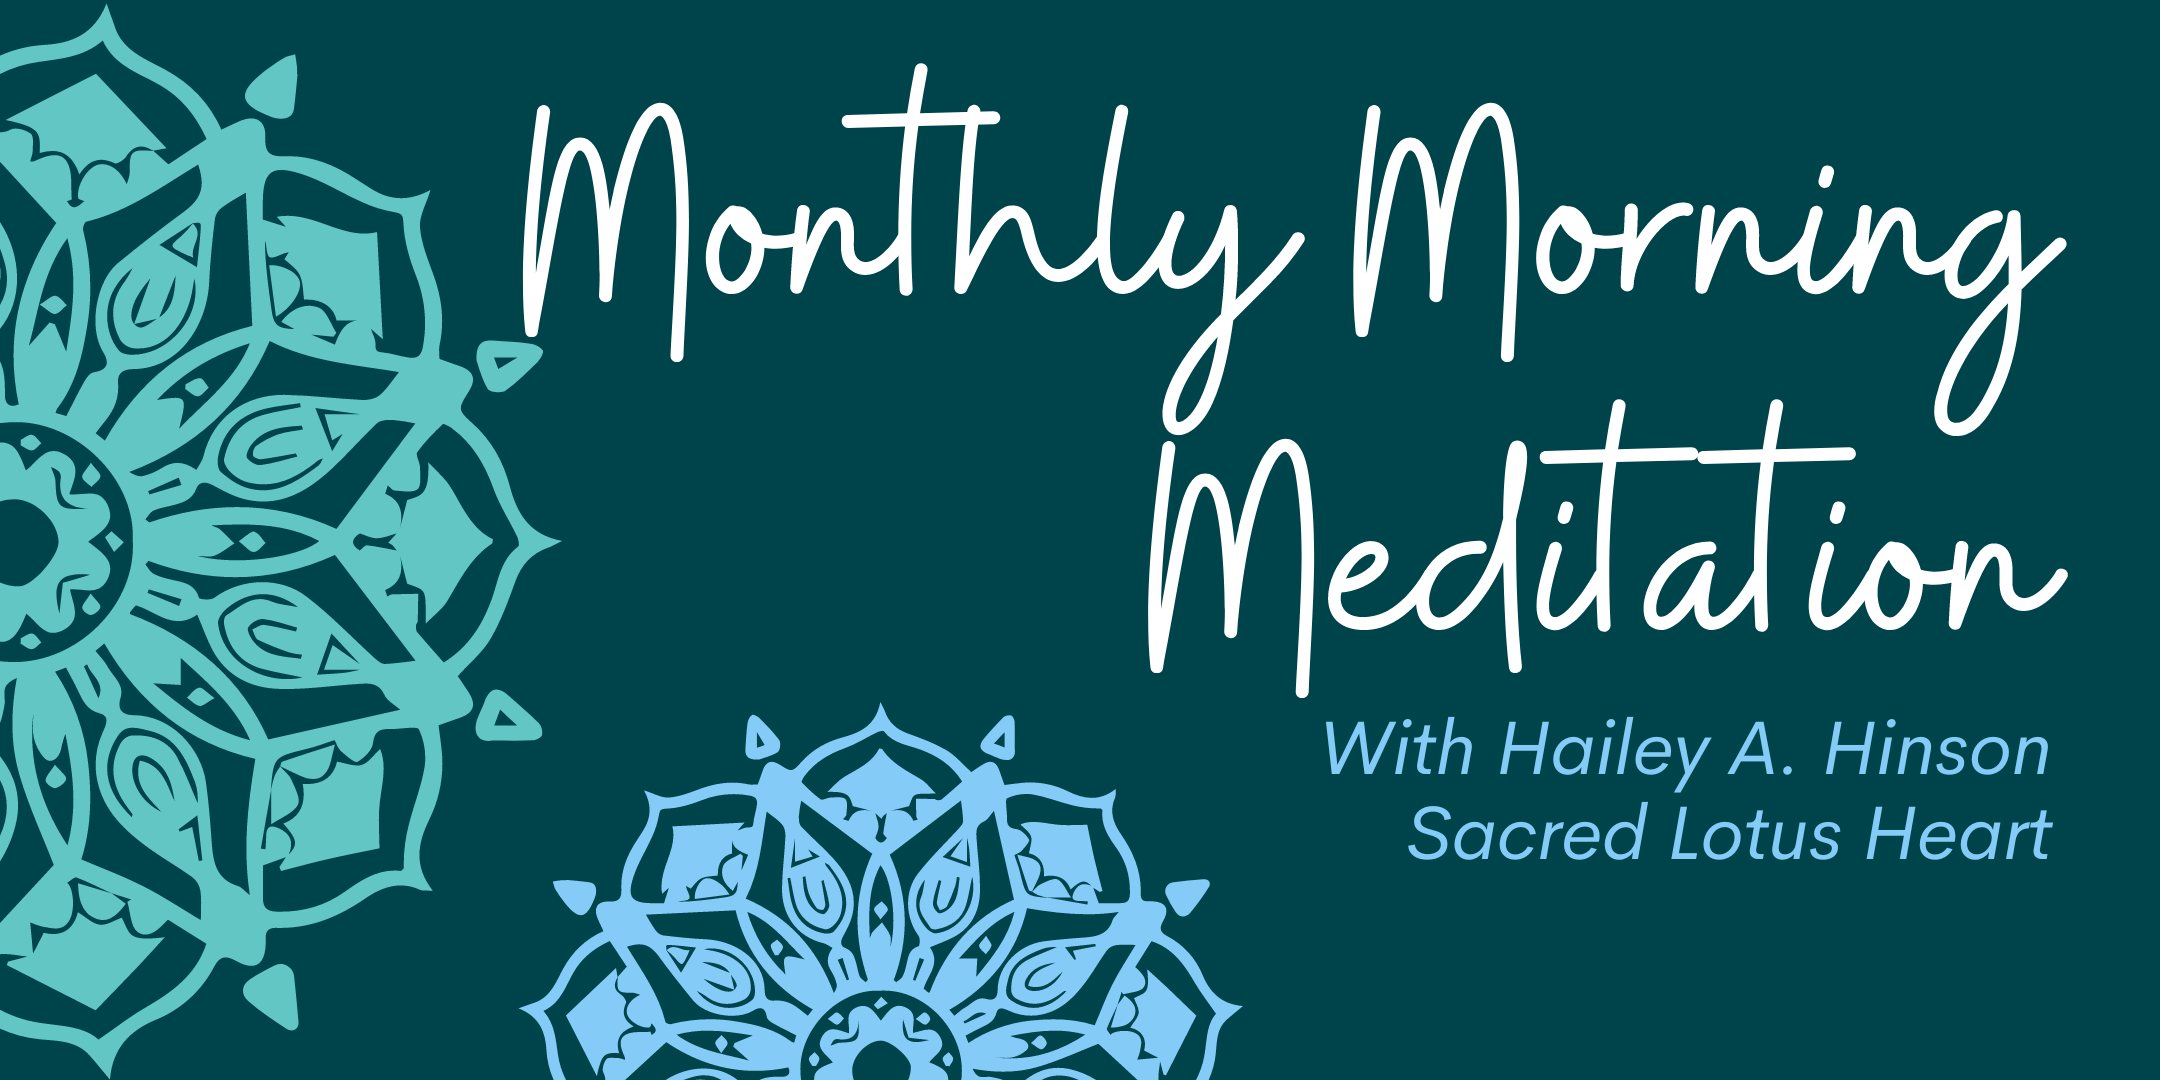 image of "Monthly Morning Meditation"